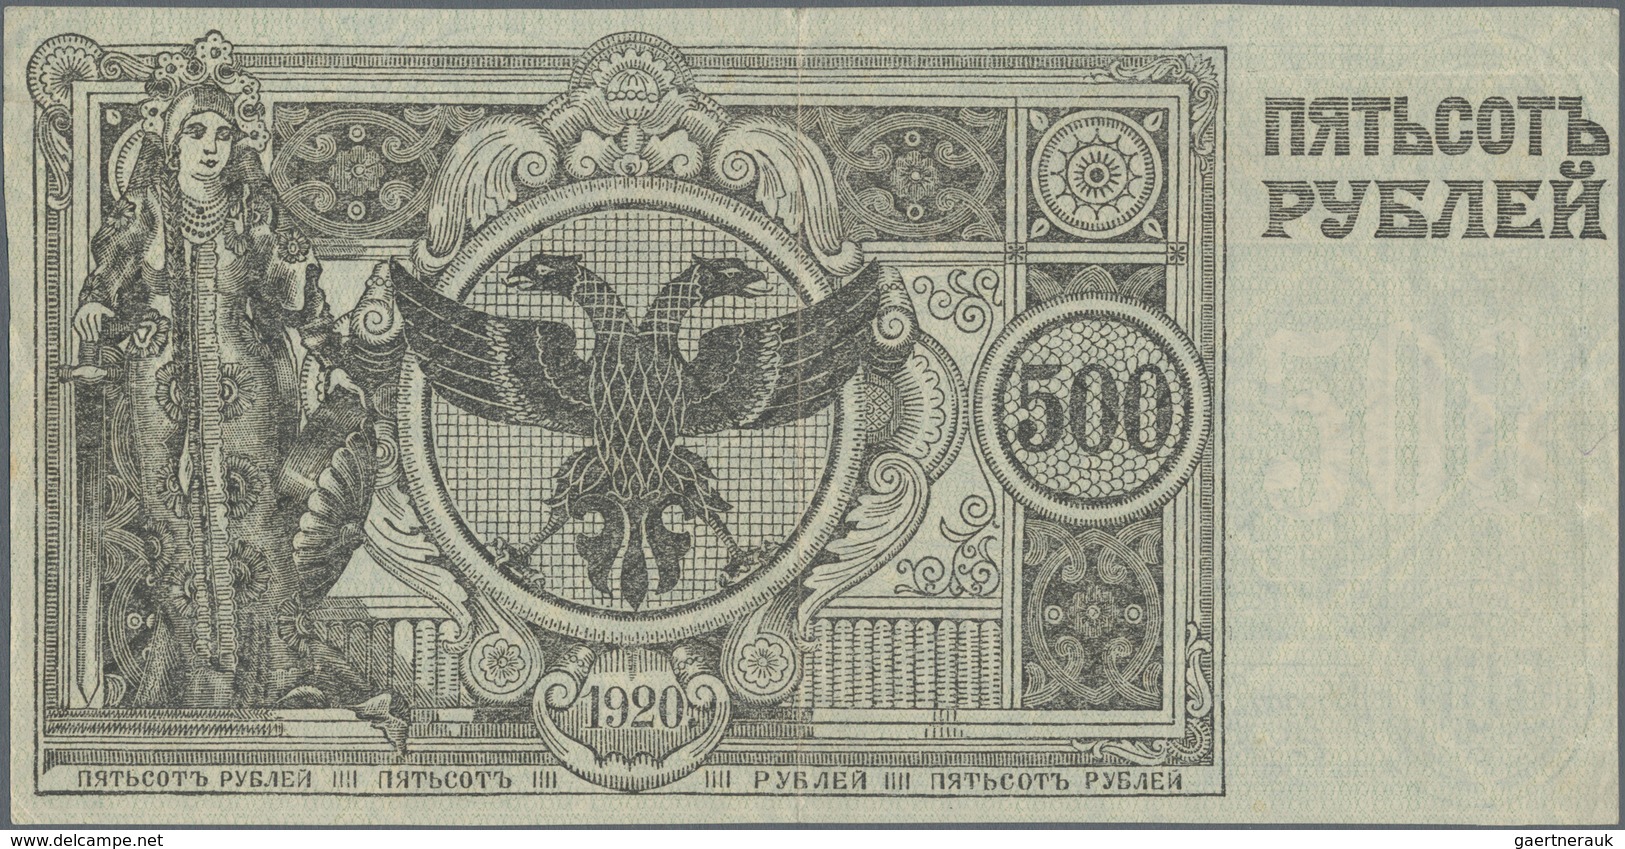 Russia / Russland: East Siberia 500 Rubles 1920, P.S1192 In VF+ Condition. - Russia